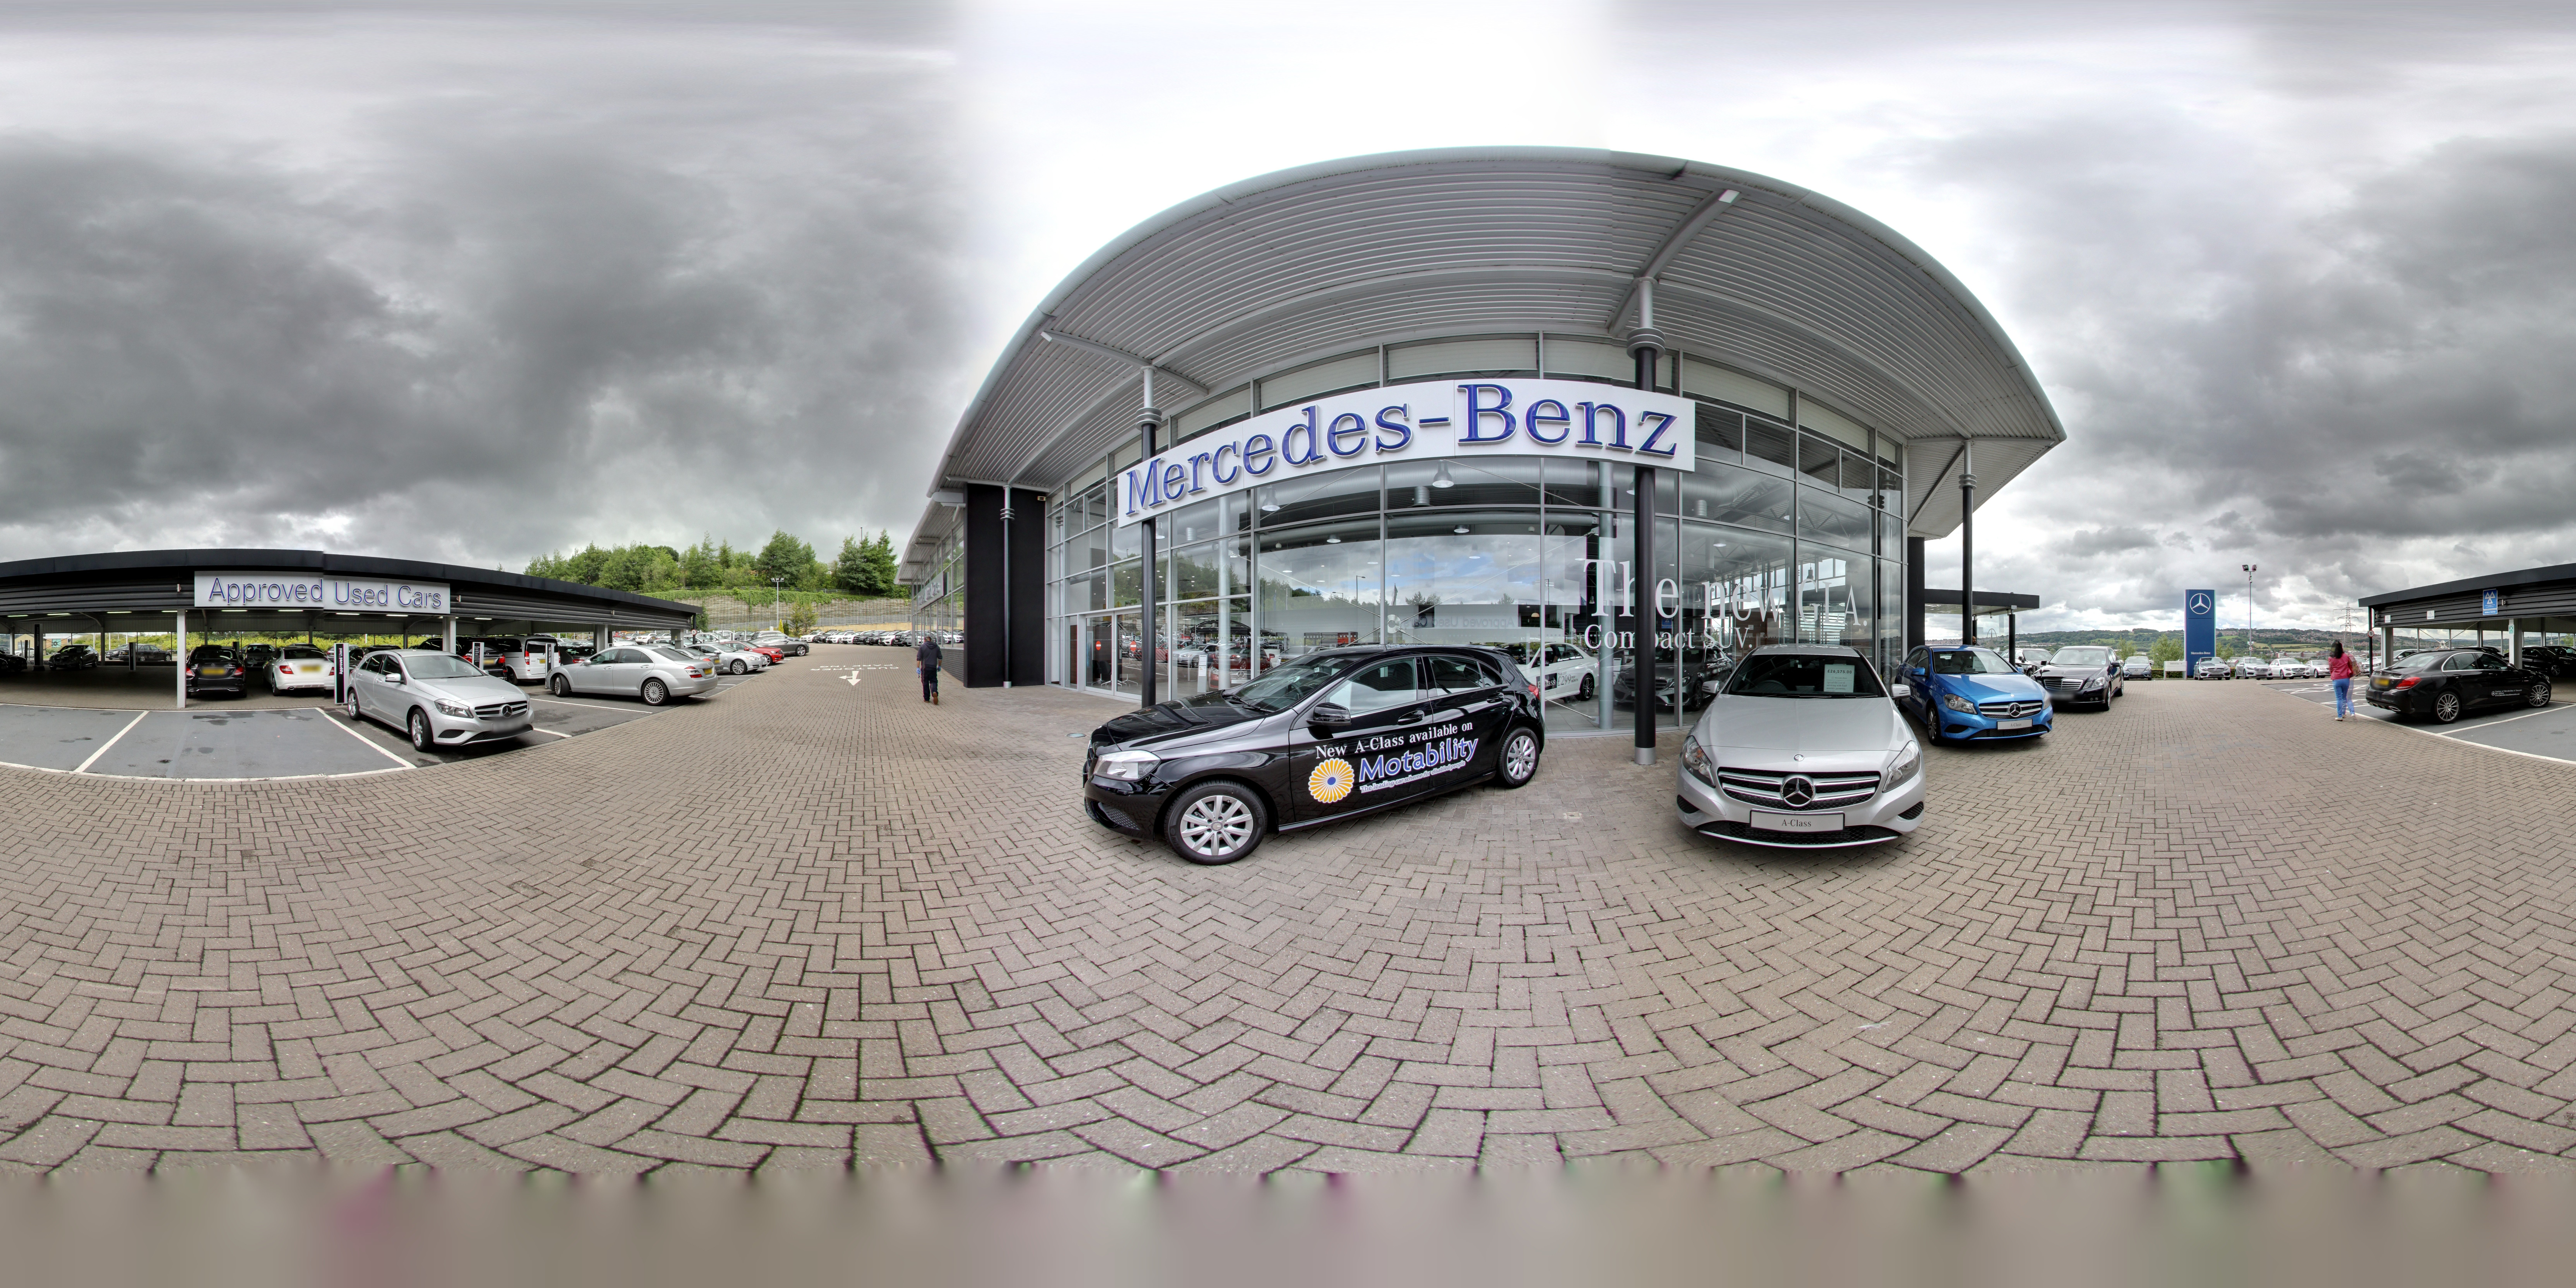 Mercedes-Benz of Newcastle Newcastle upon Tyne 01912 267444